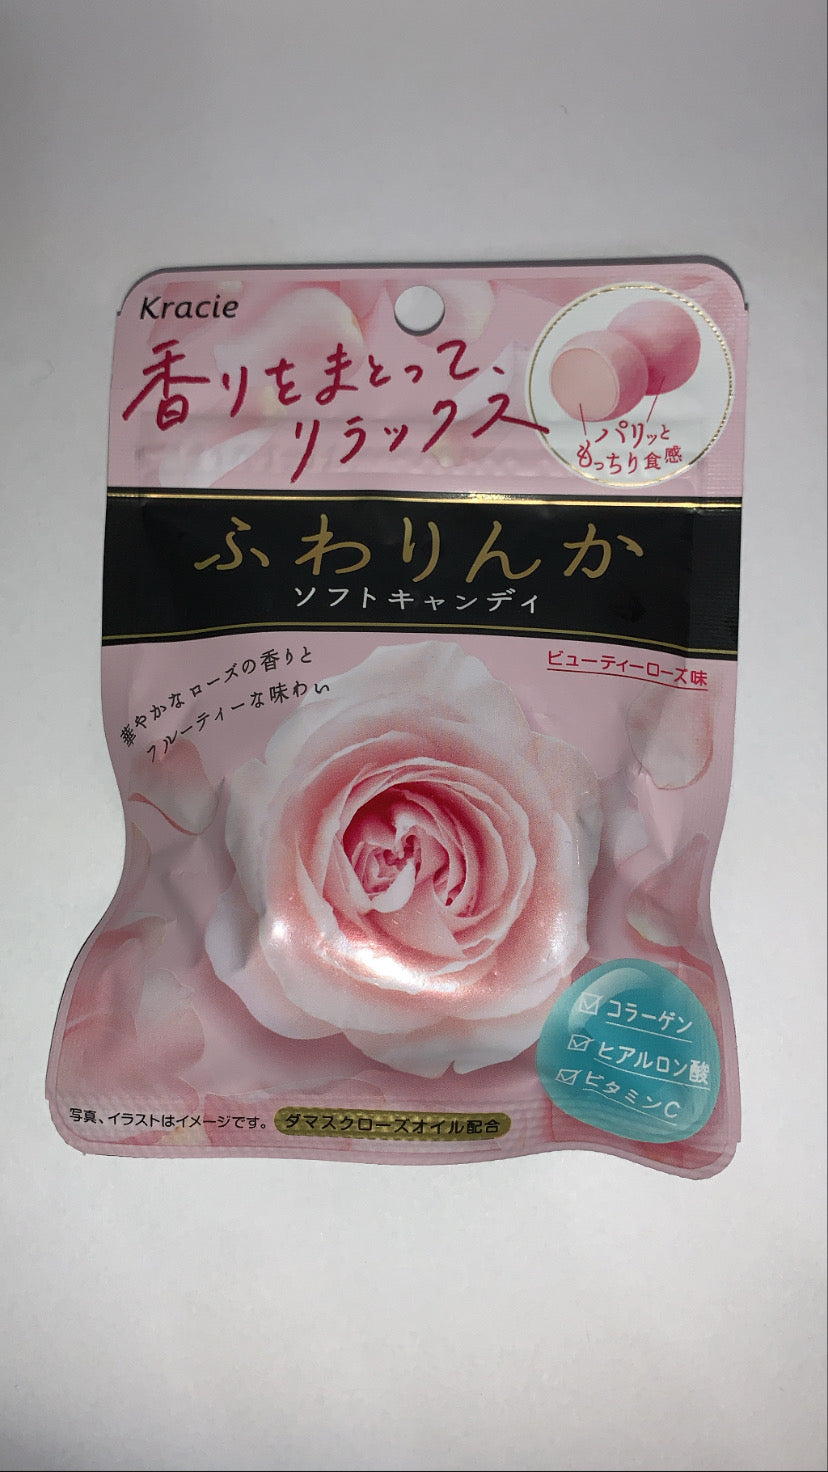 Kracie rose candy (Japan)